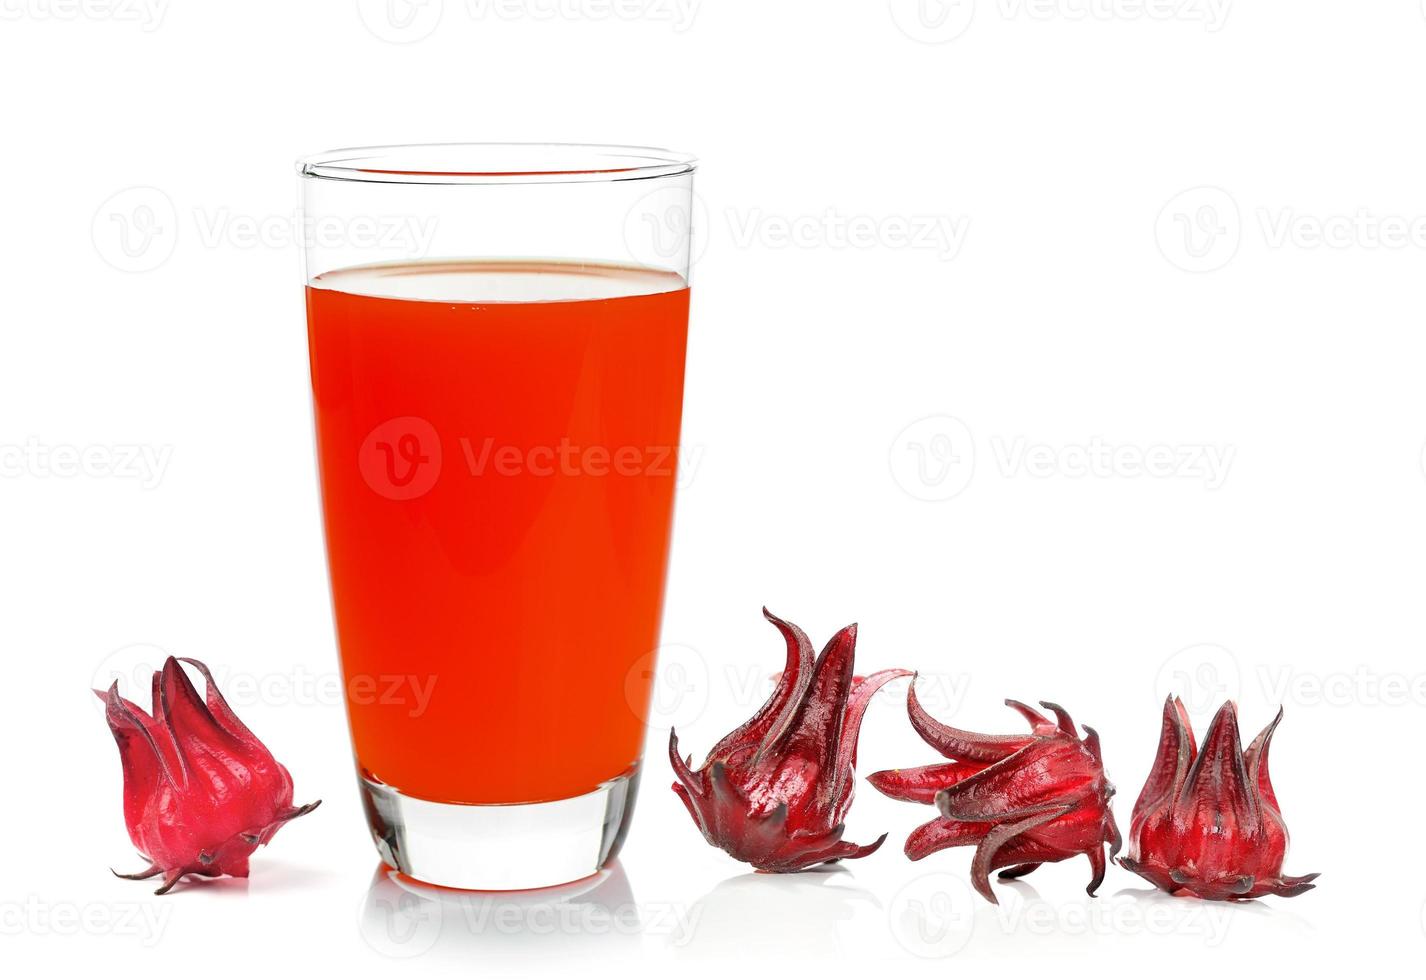 färsk roselle med juice över vit bakgrund foto